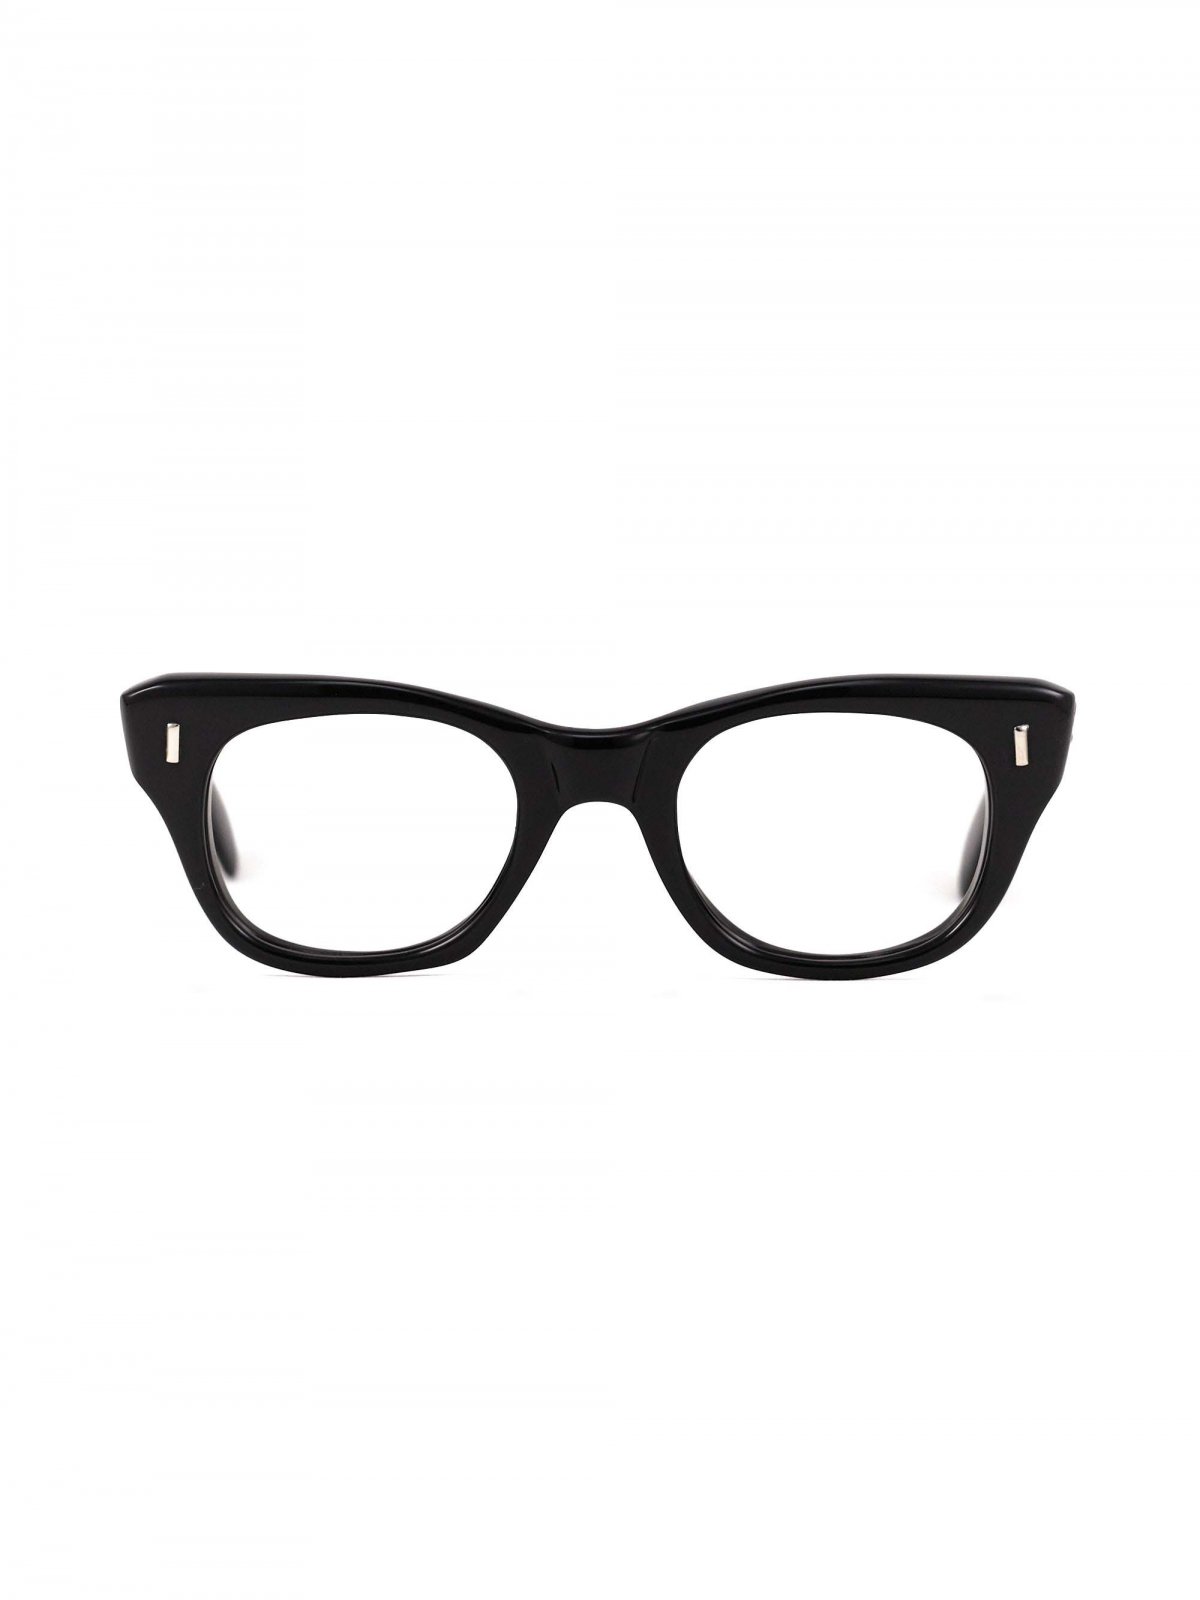 1960s FRANCE VINTAGE EYEGLASS BLACK - OPT-751 ビンテージ眼鏡 ...